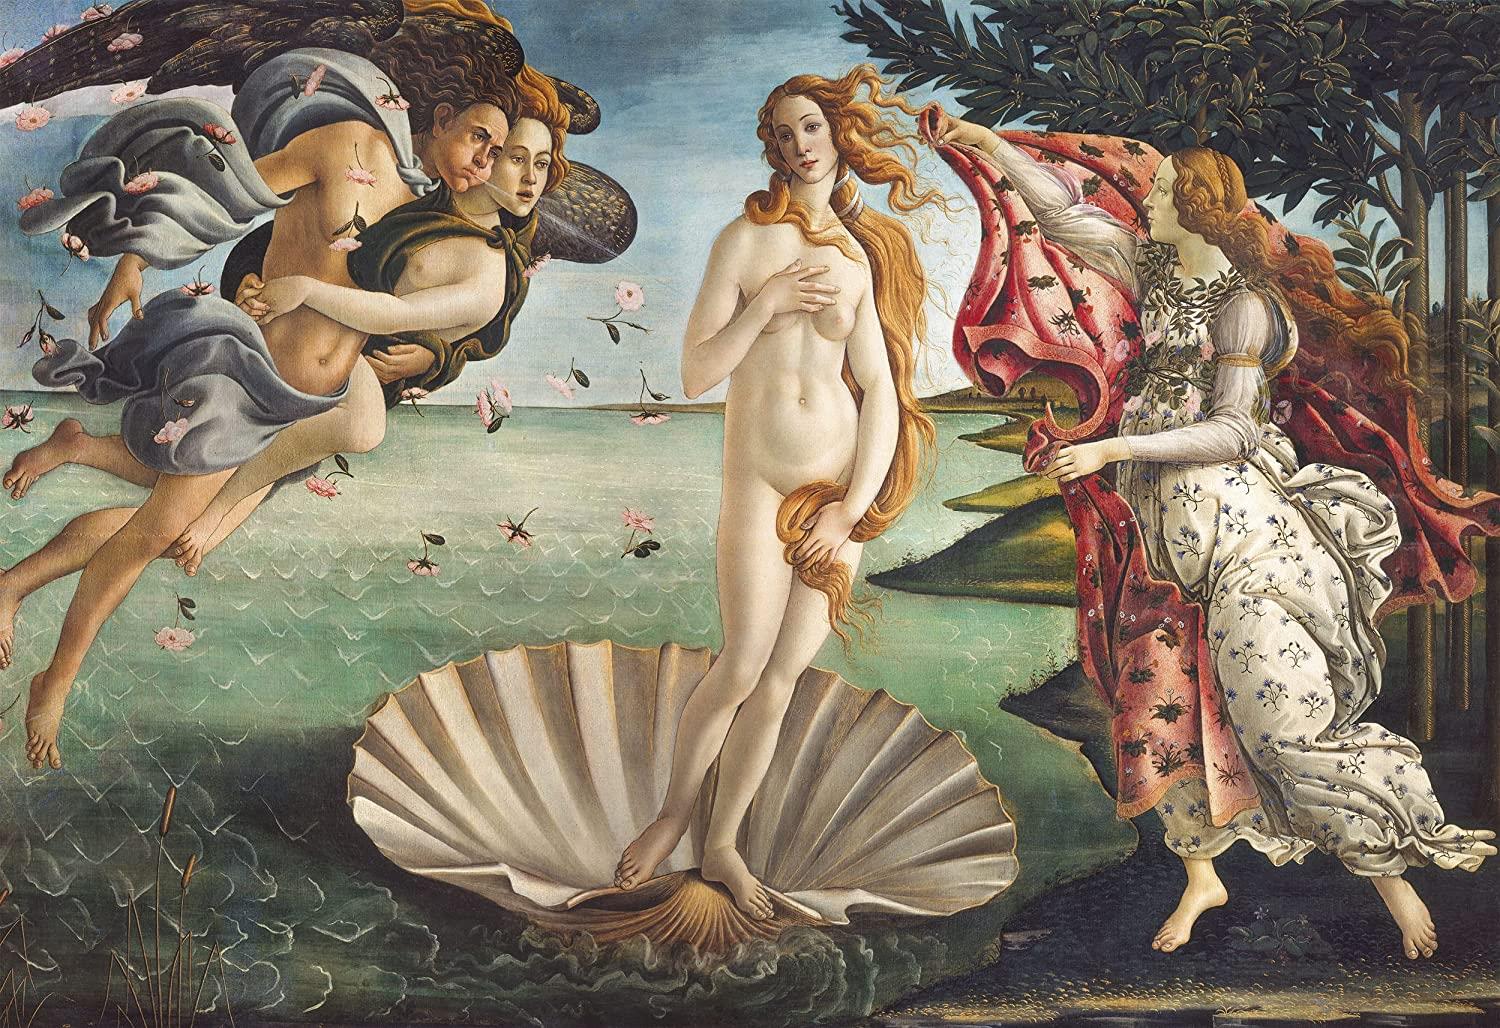 Clementoni Museum Botticelli Birth Of Venus Jigsaw Puzzle (2000 Pieces)